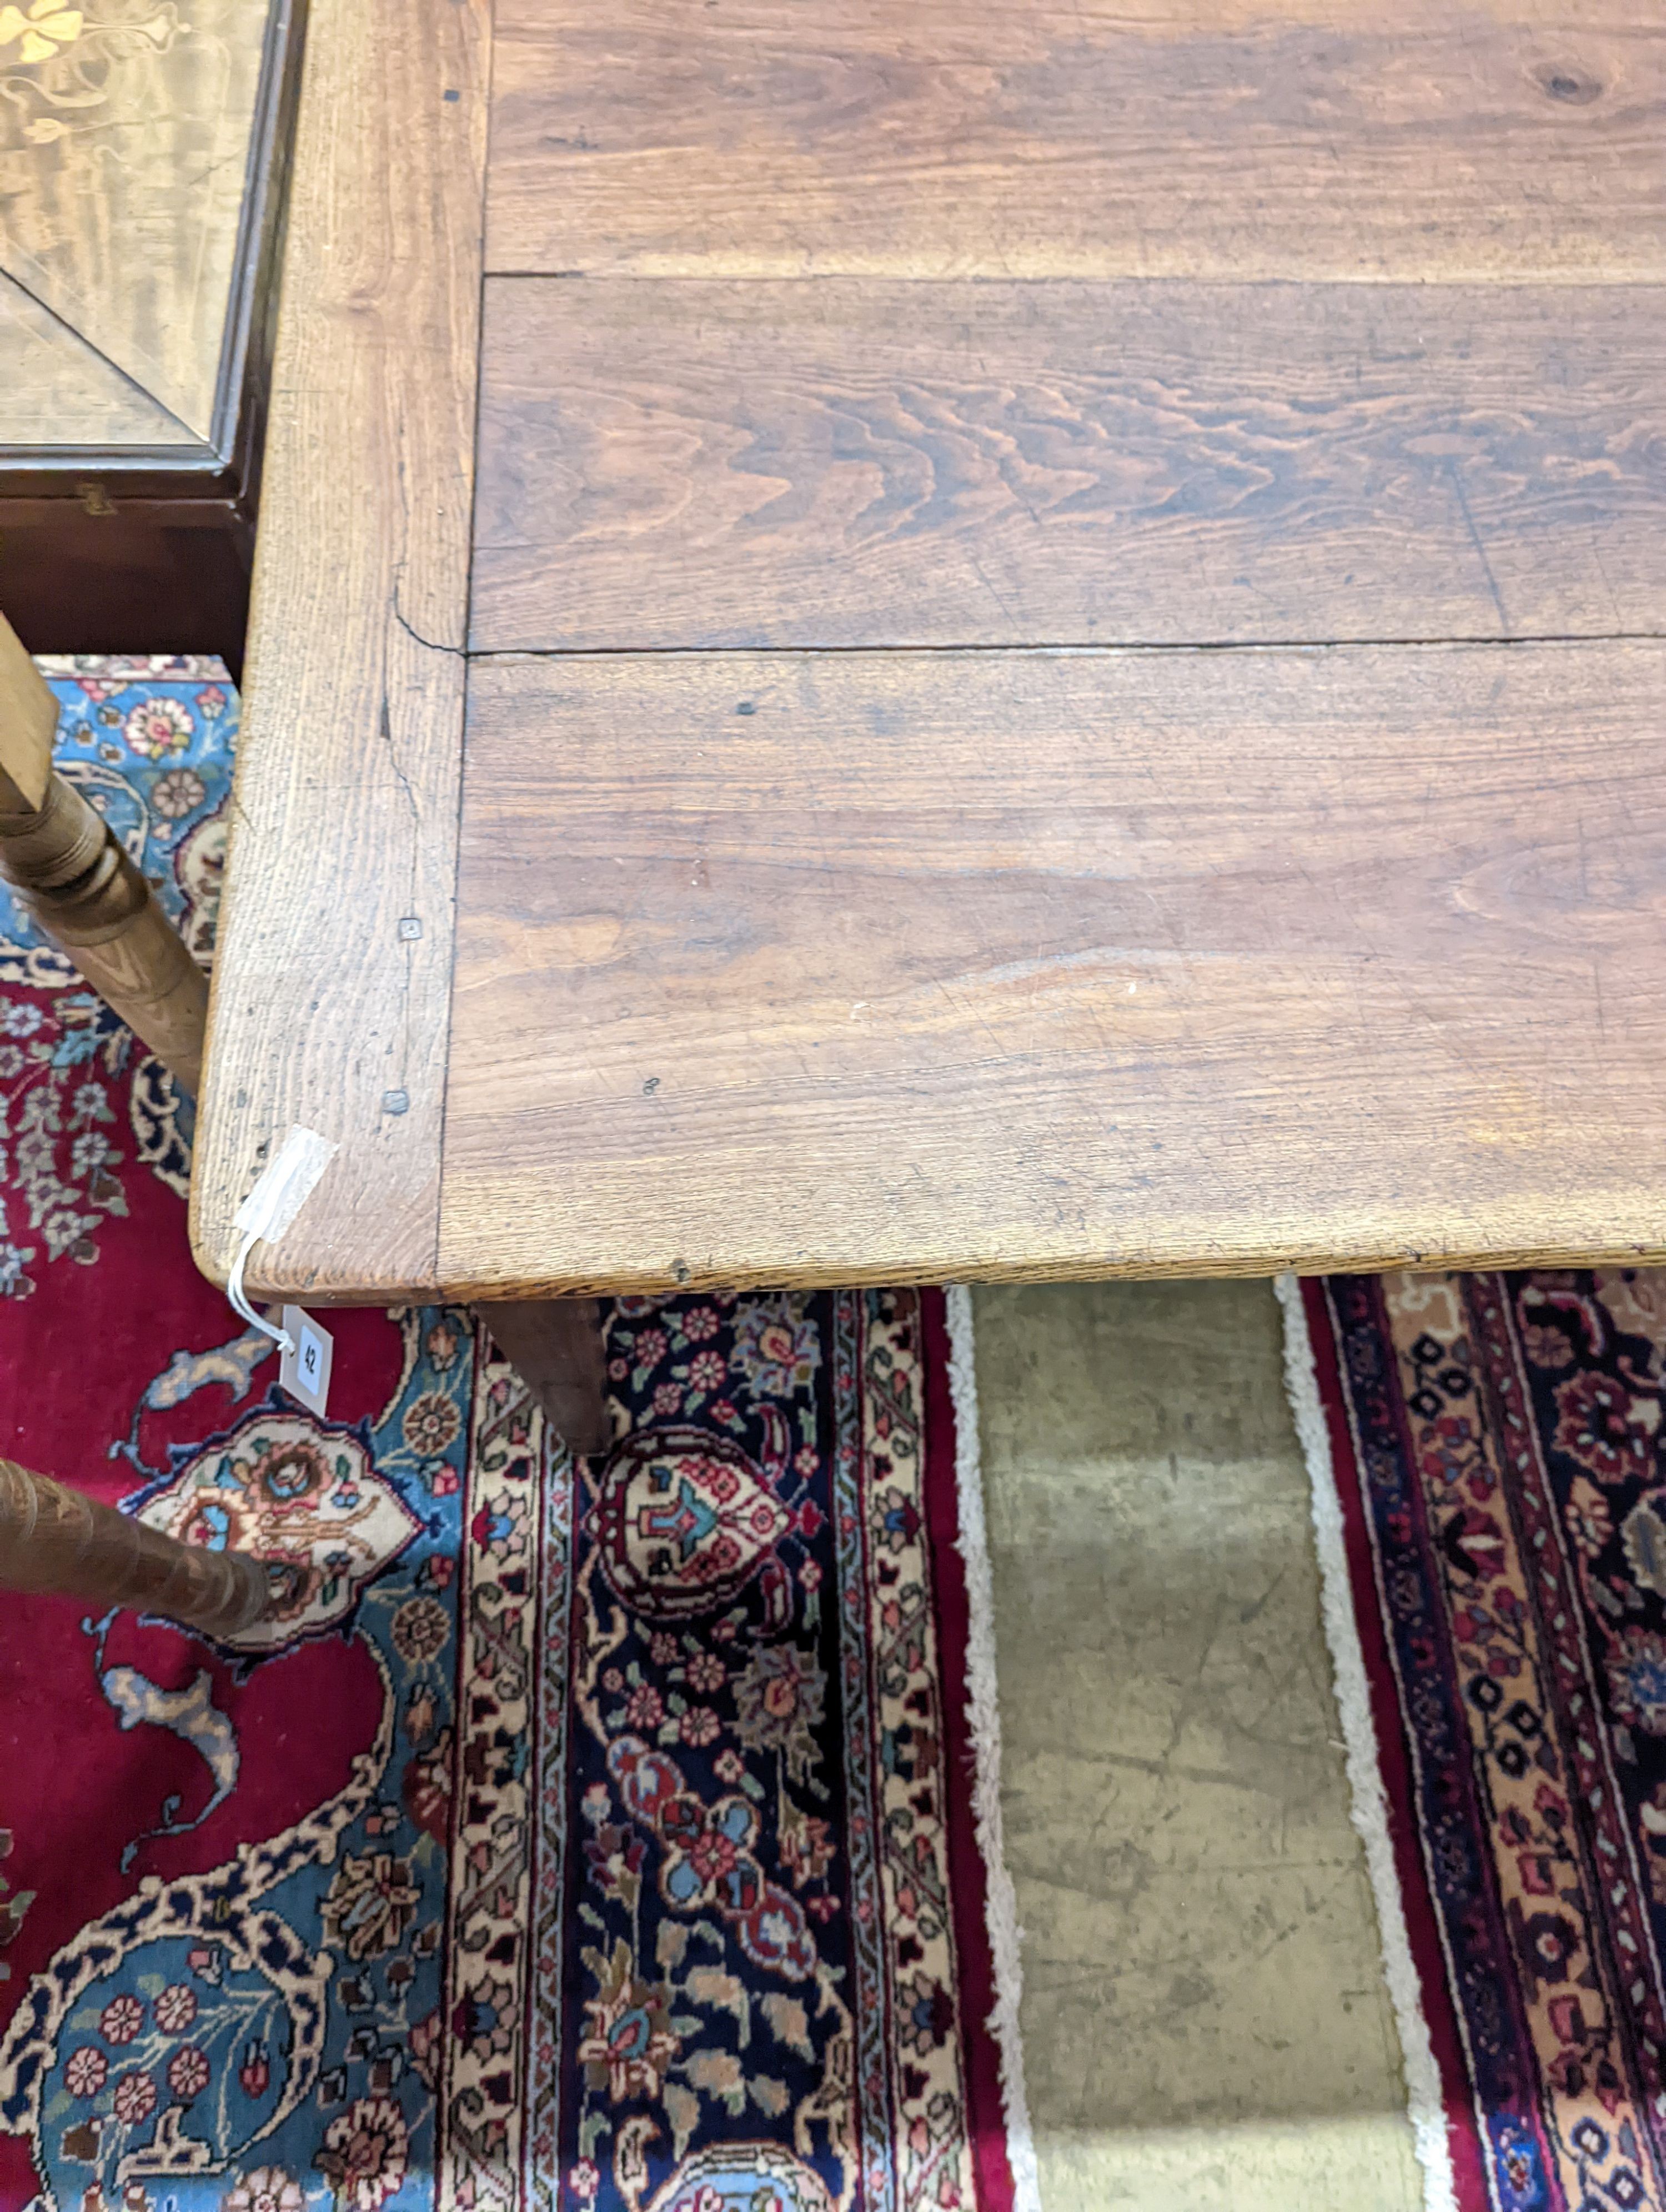 A 19th century French rectangular oak kitchen table. W-153cm, D-75cm, H-73cm.